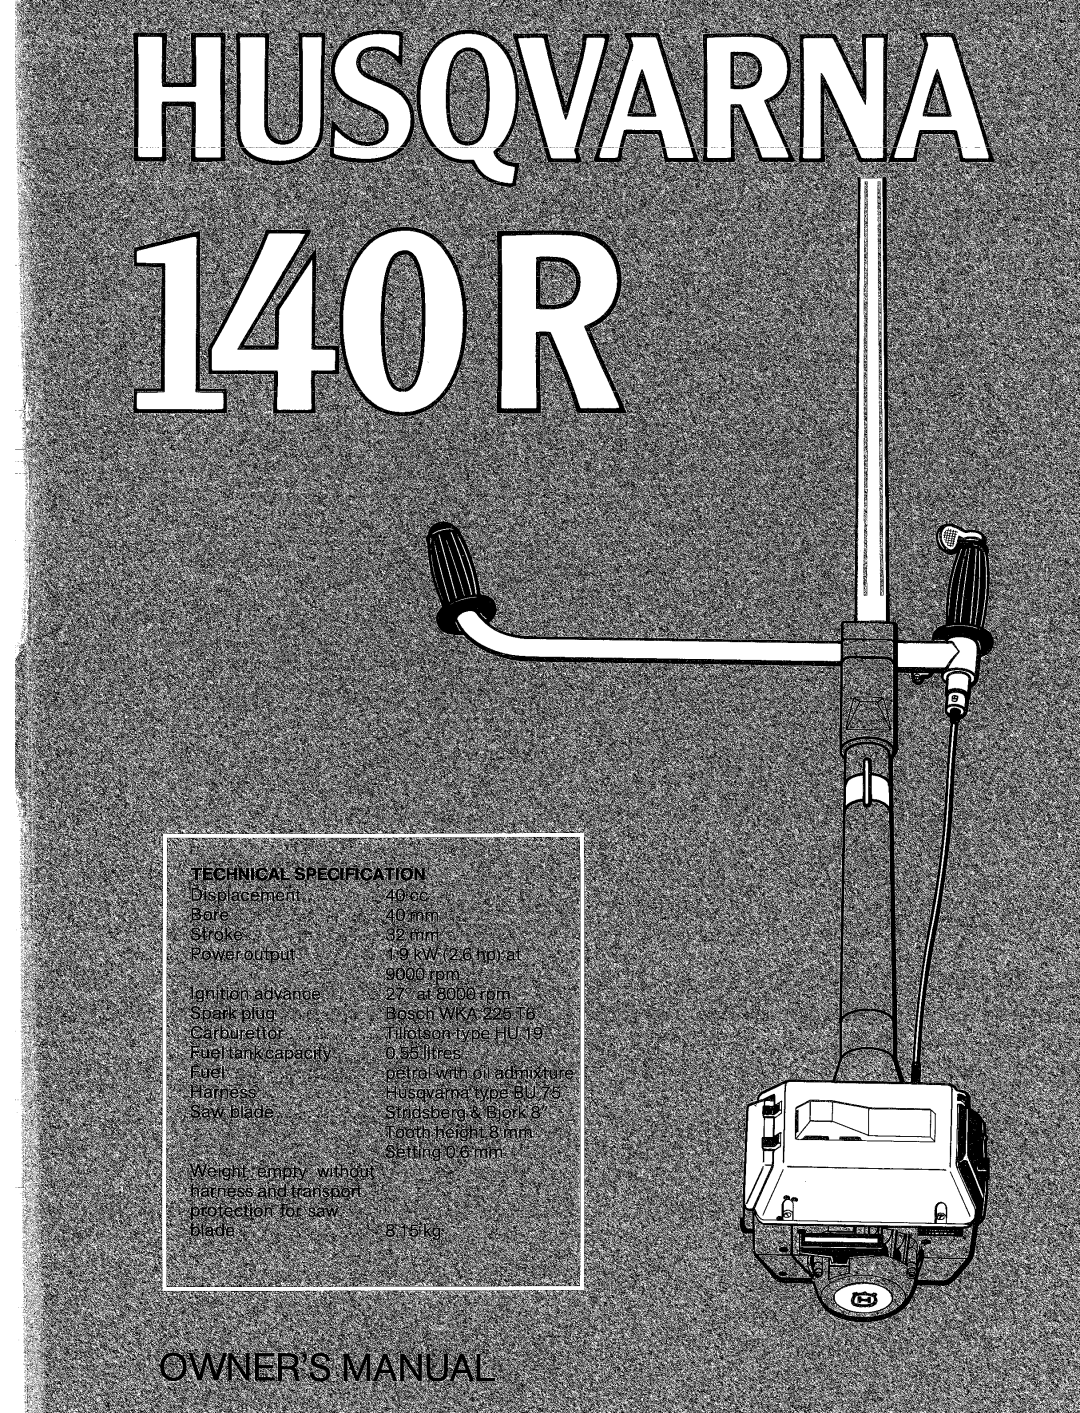 Husqvarna 140R manual 